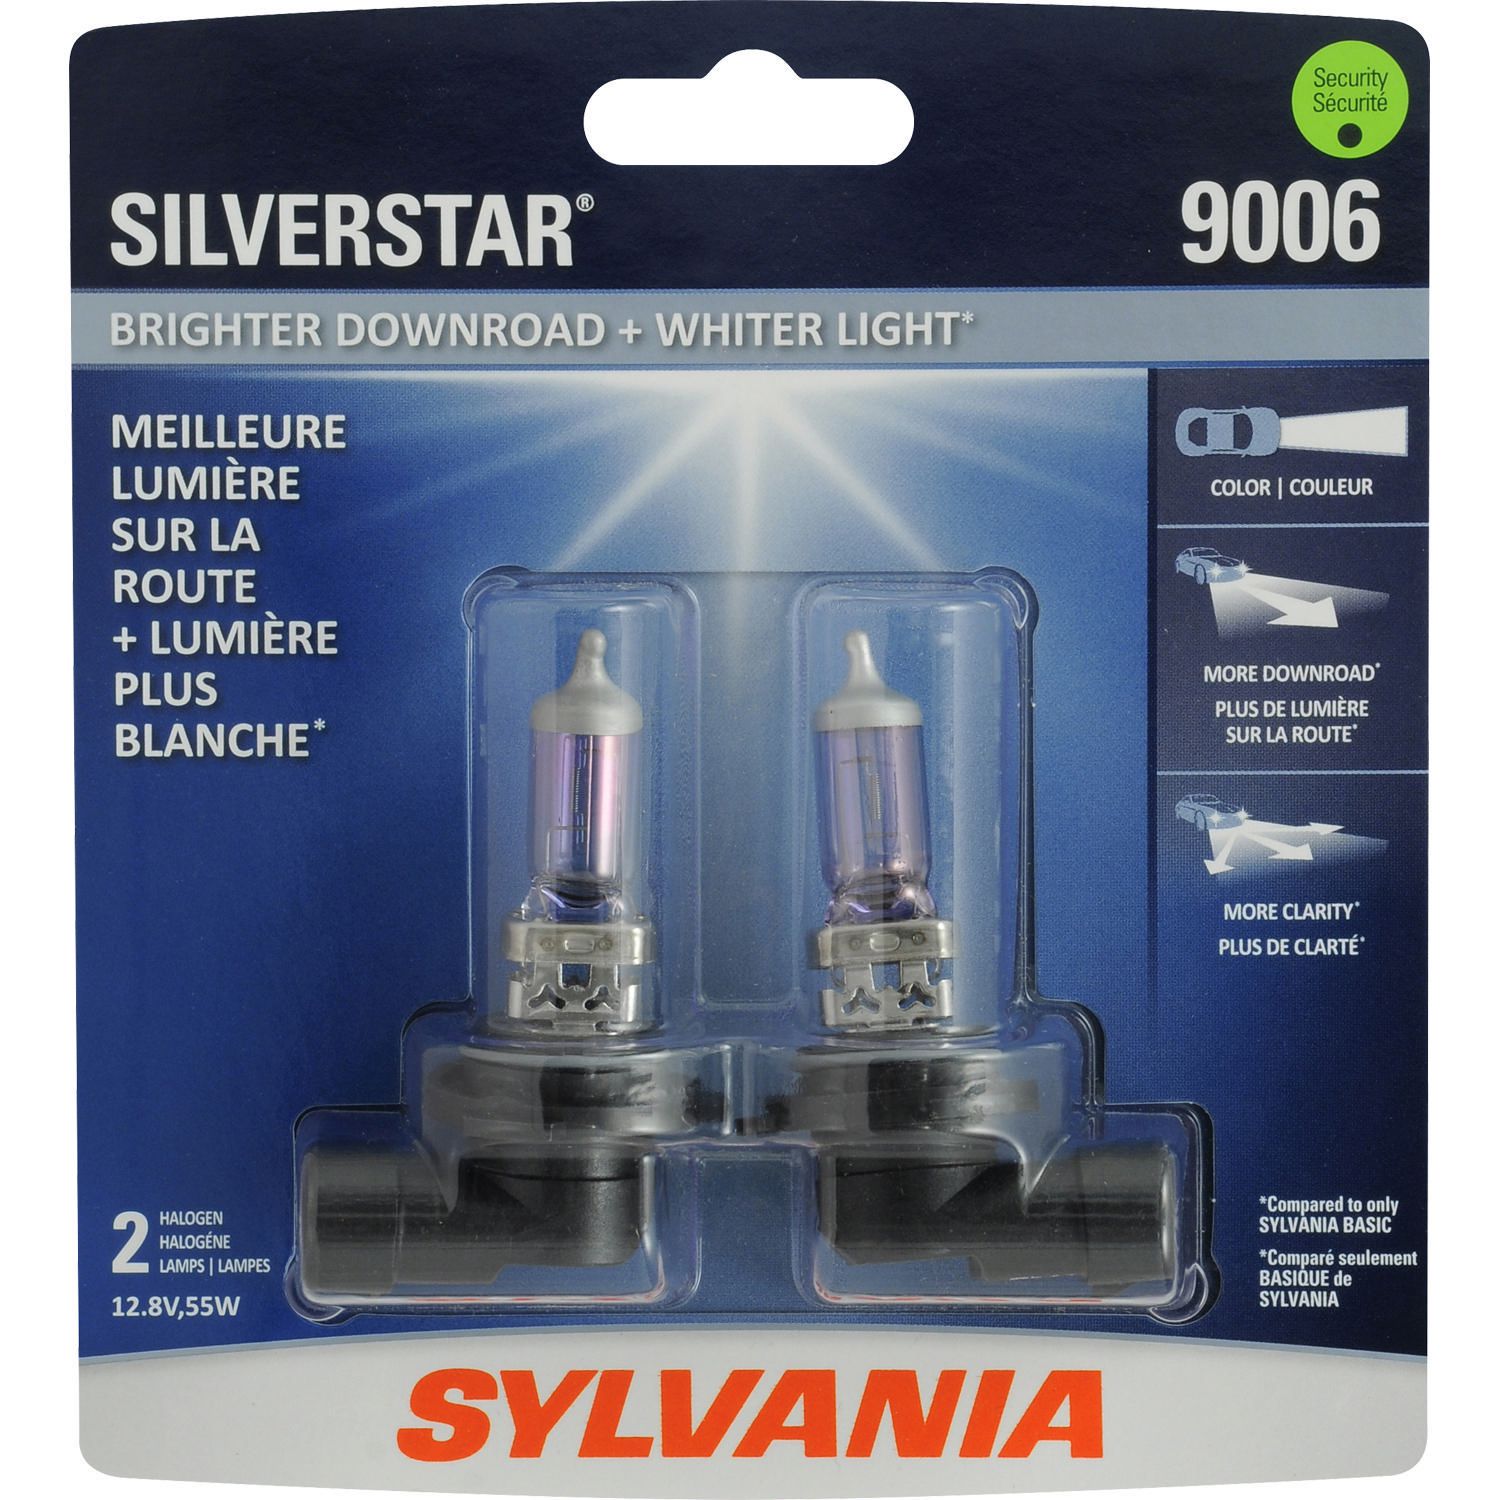 sylvania-9006-silverstar-halogen-headlights-walmart-canada